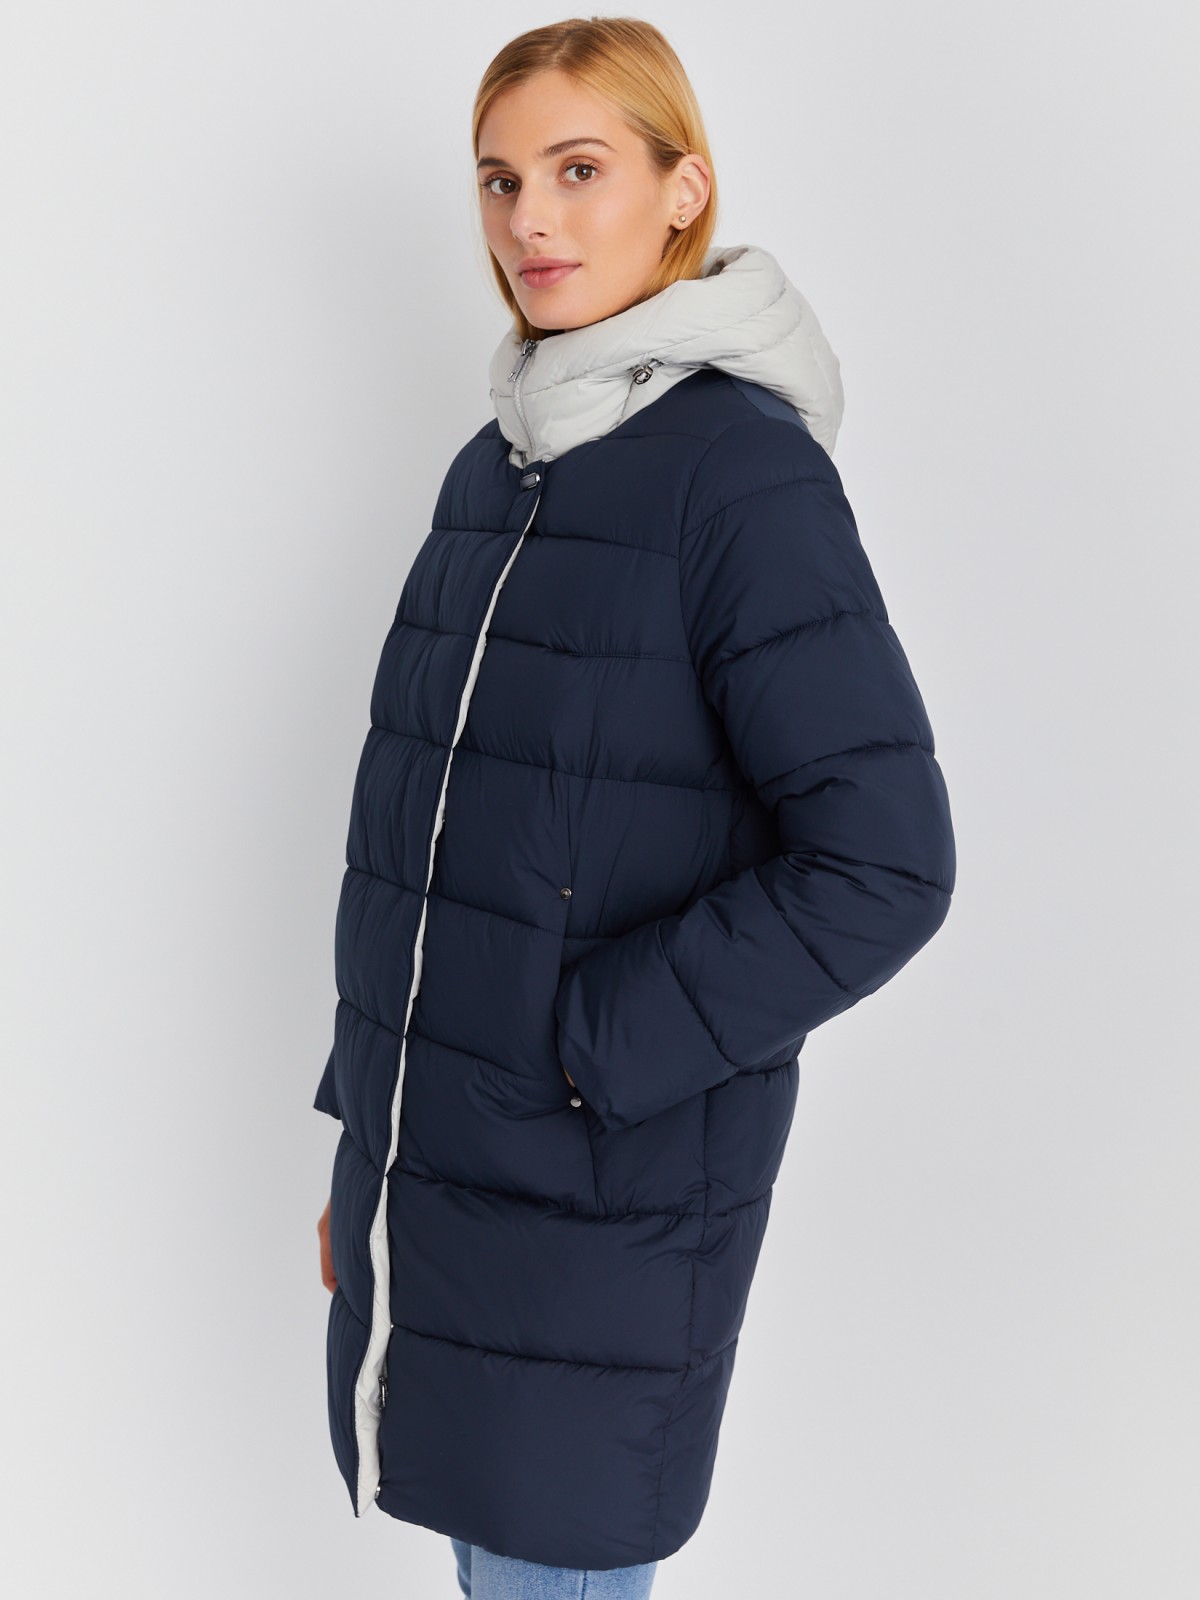 Тёплая стёганая куртка-пальто на молнии с акцентным капюшоном